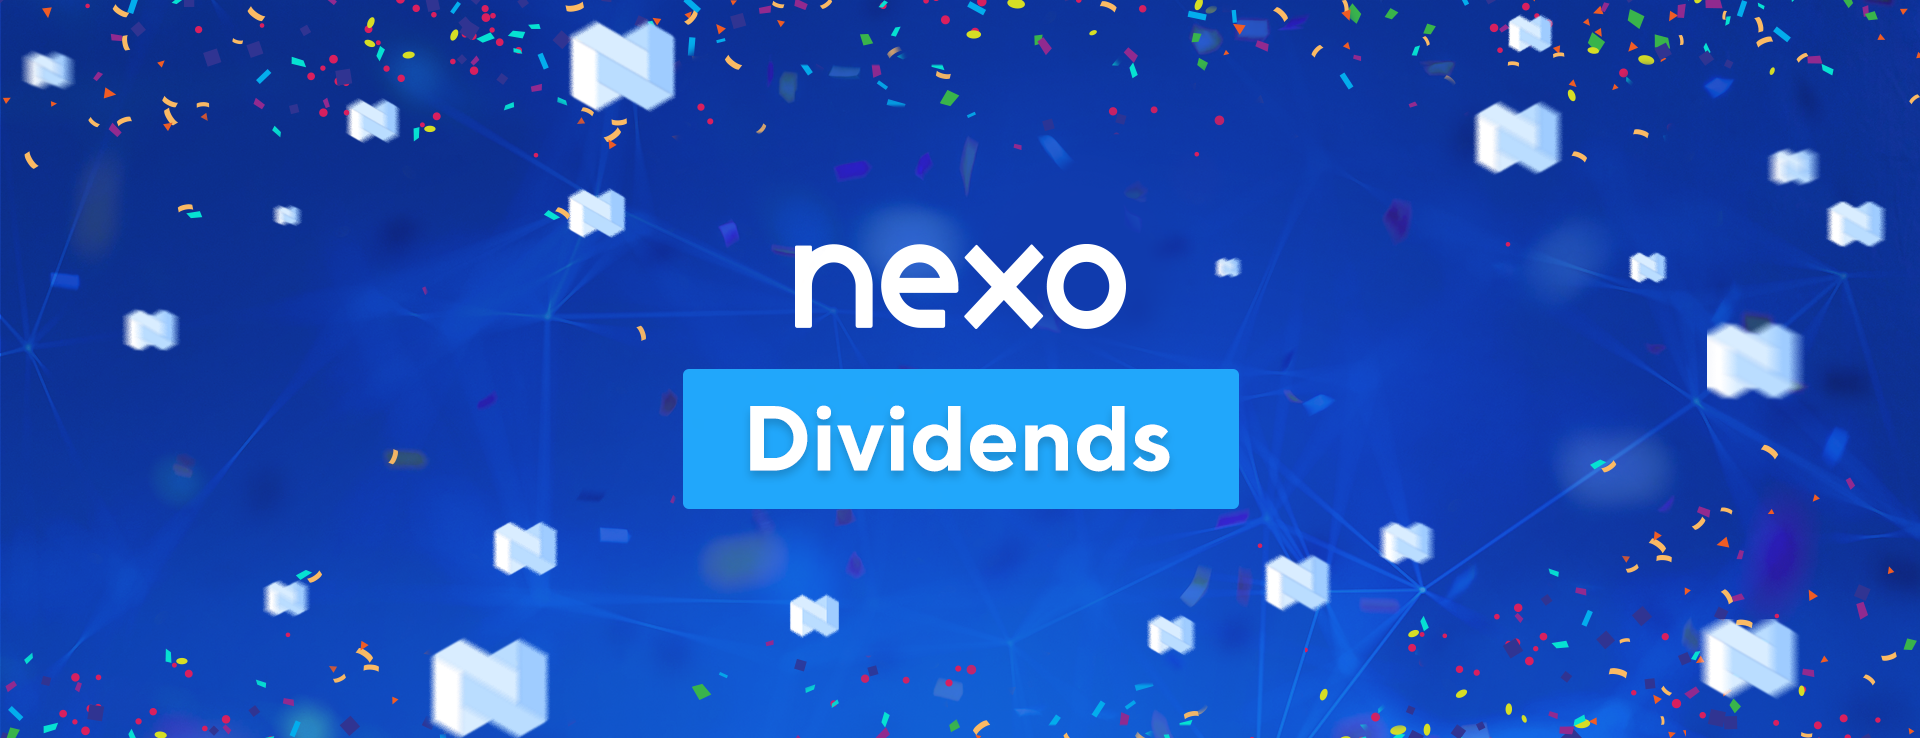 Nexo Dividends Explained